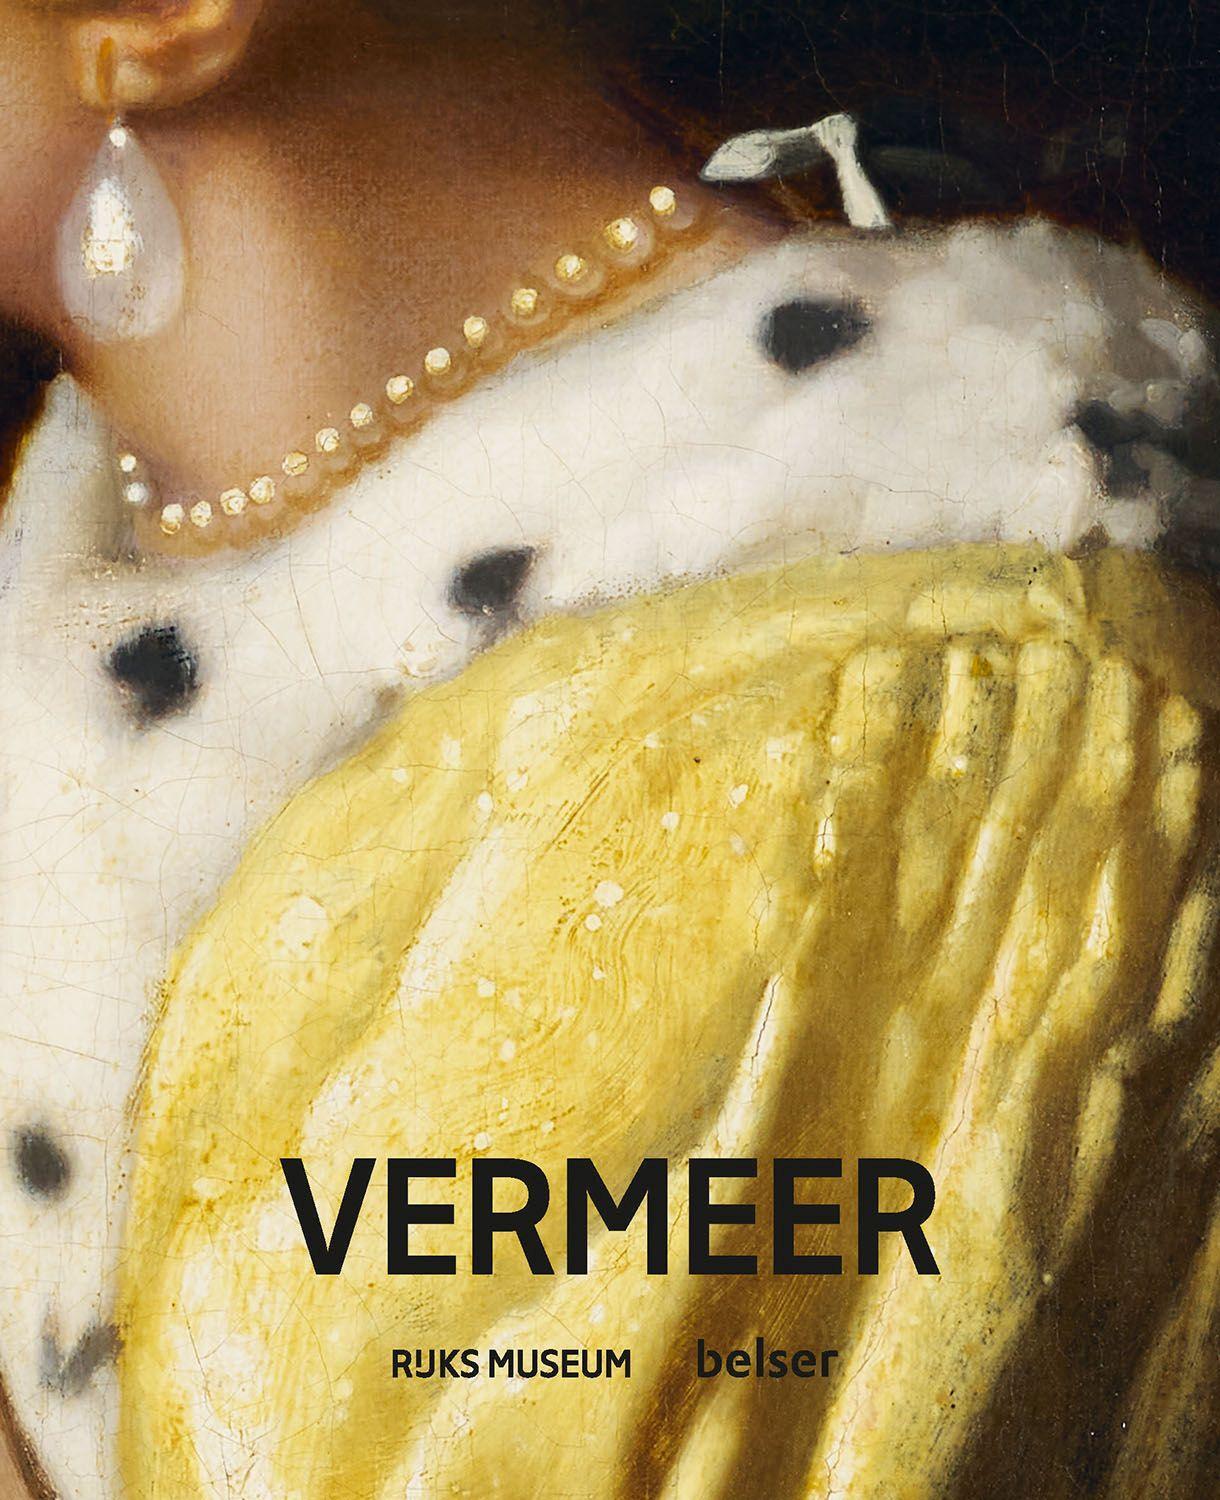 Vermeer Offizieller Begleitband zur großen Ausstellung im Rijksmuseum